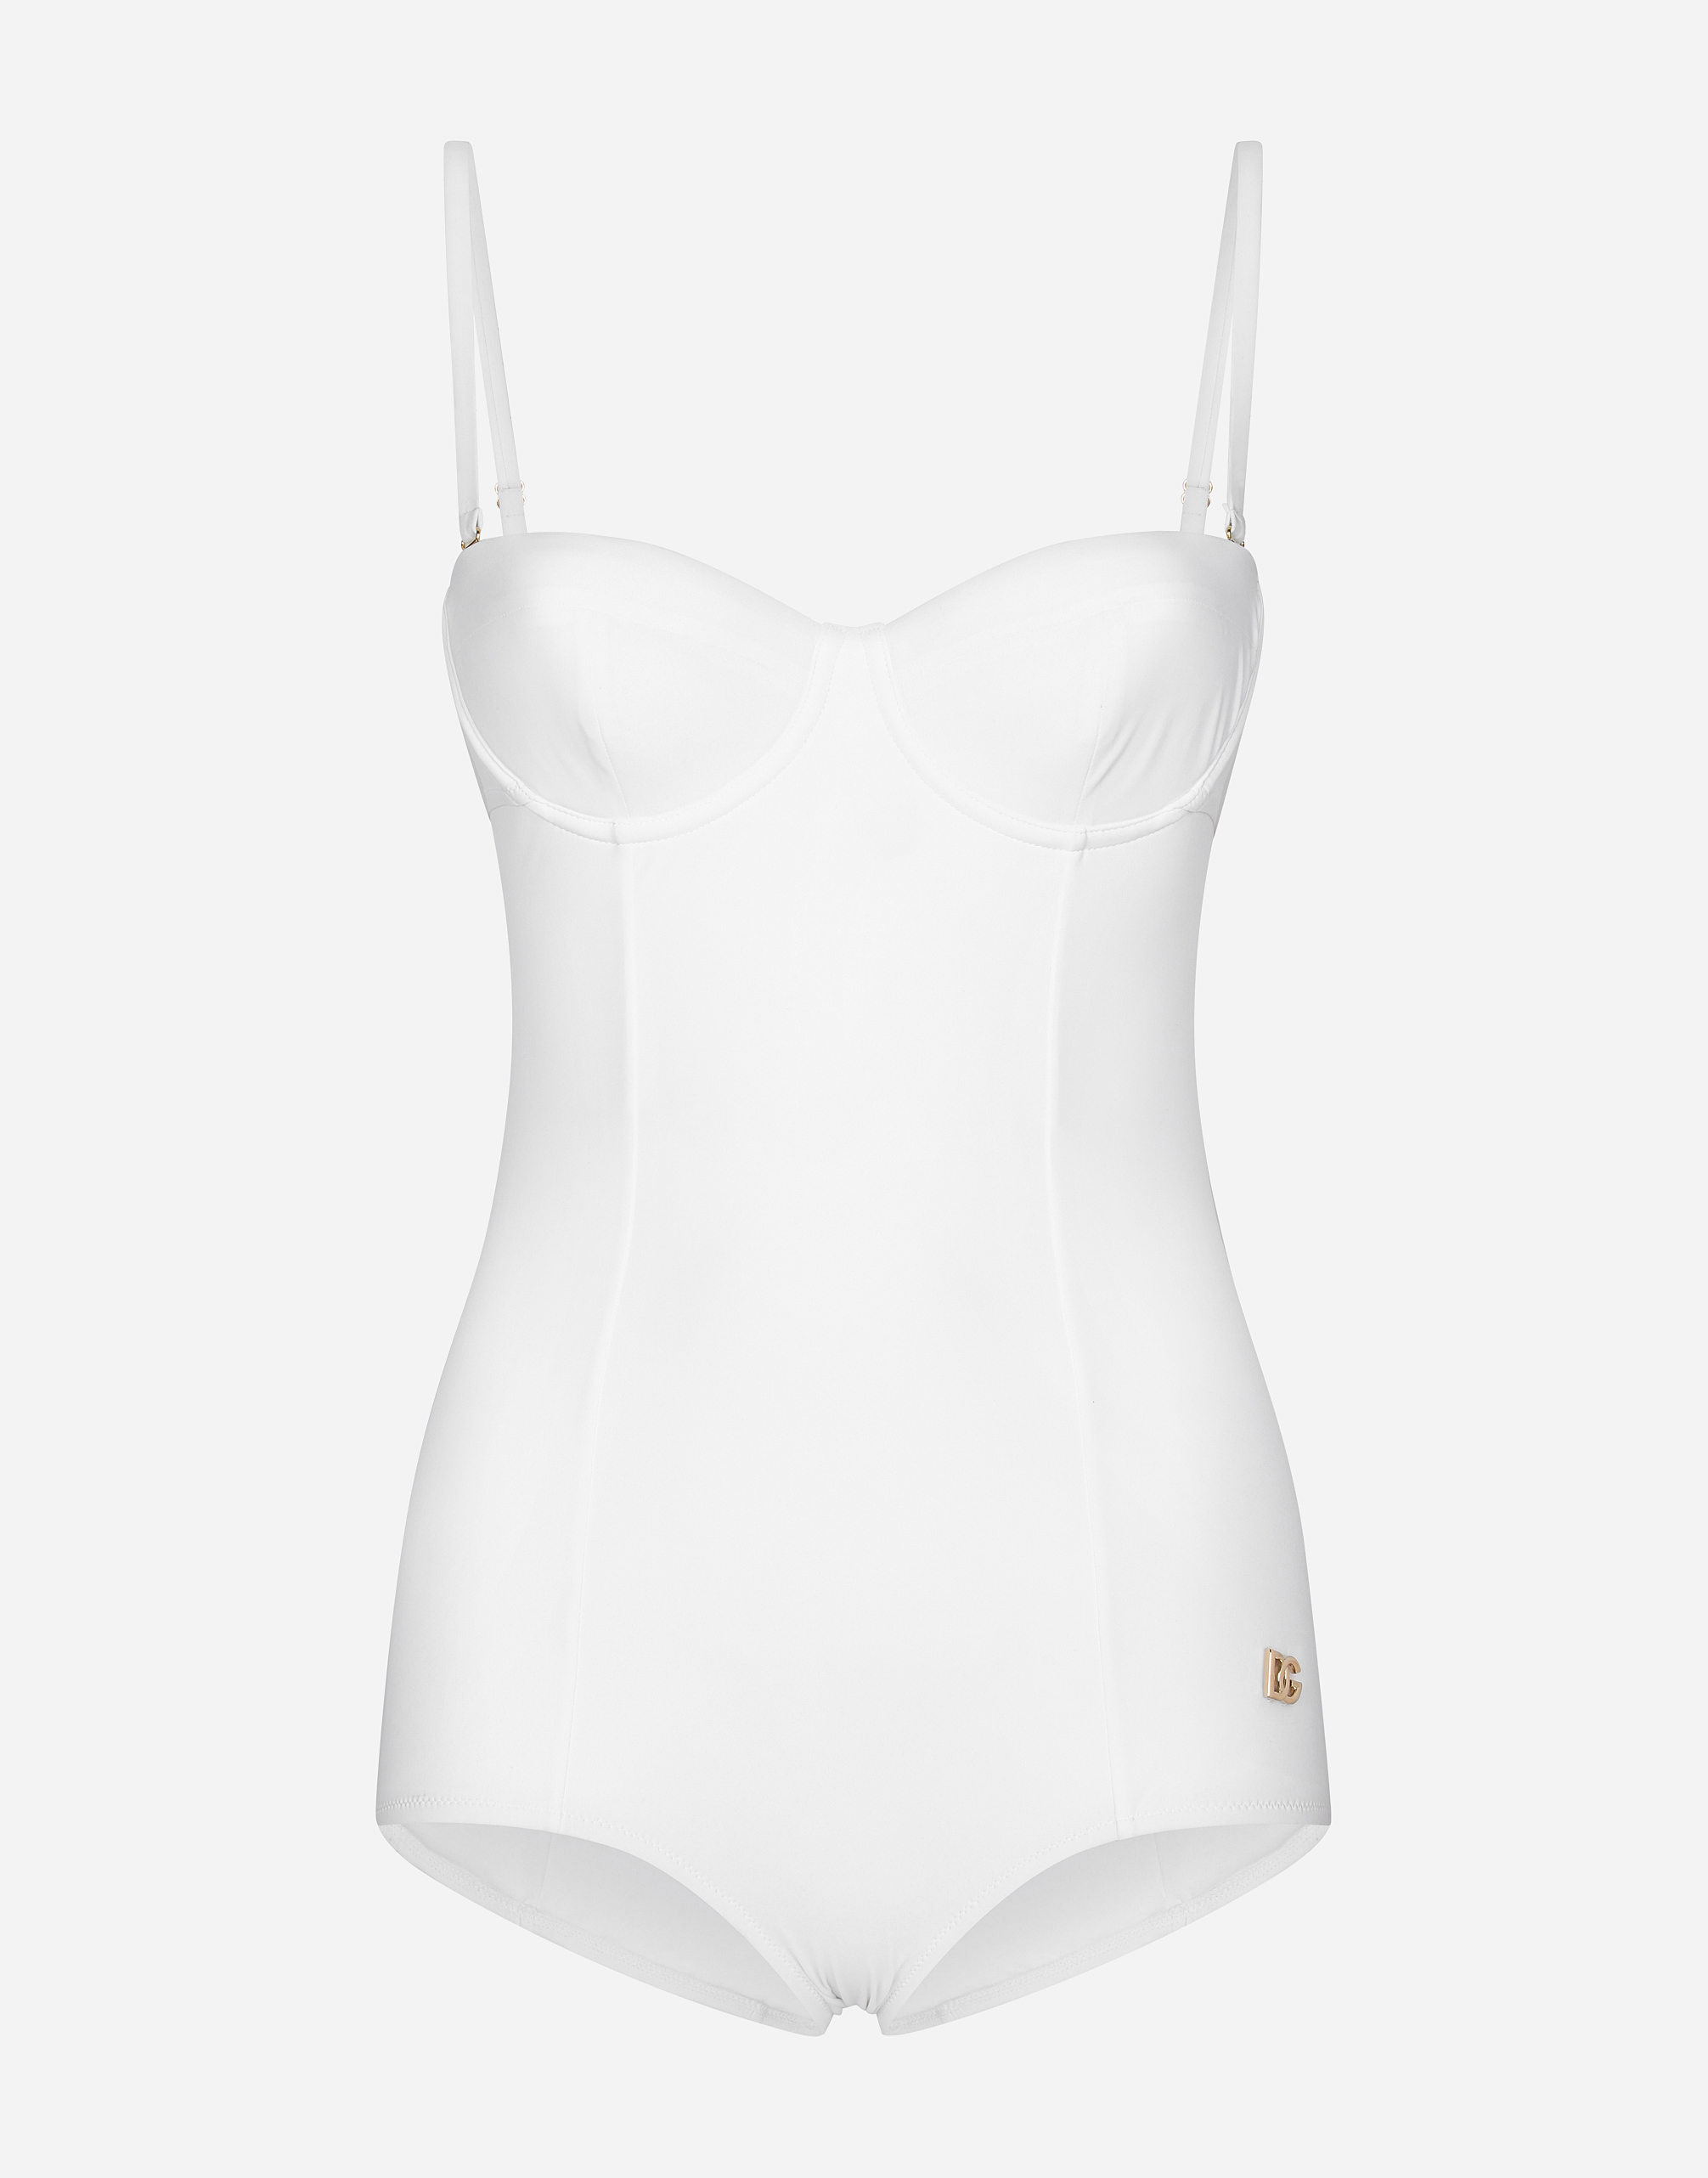 Full swimsuit with balcony neckline in White